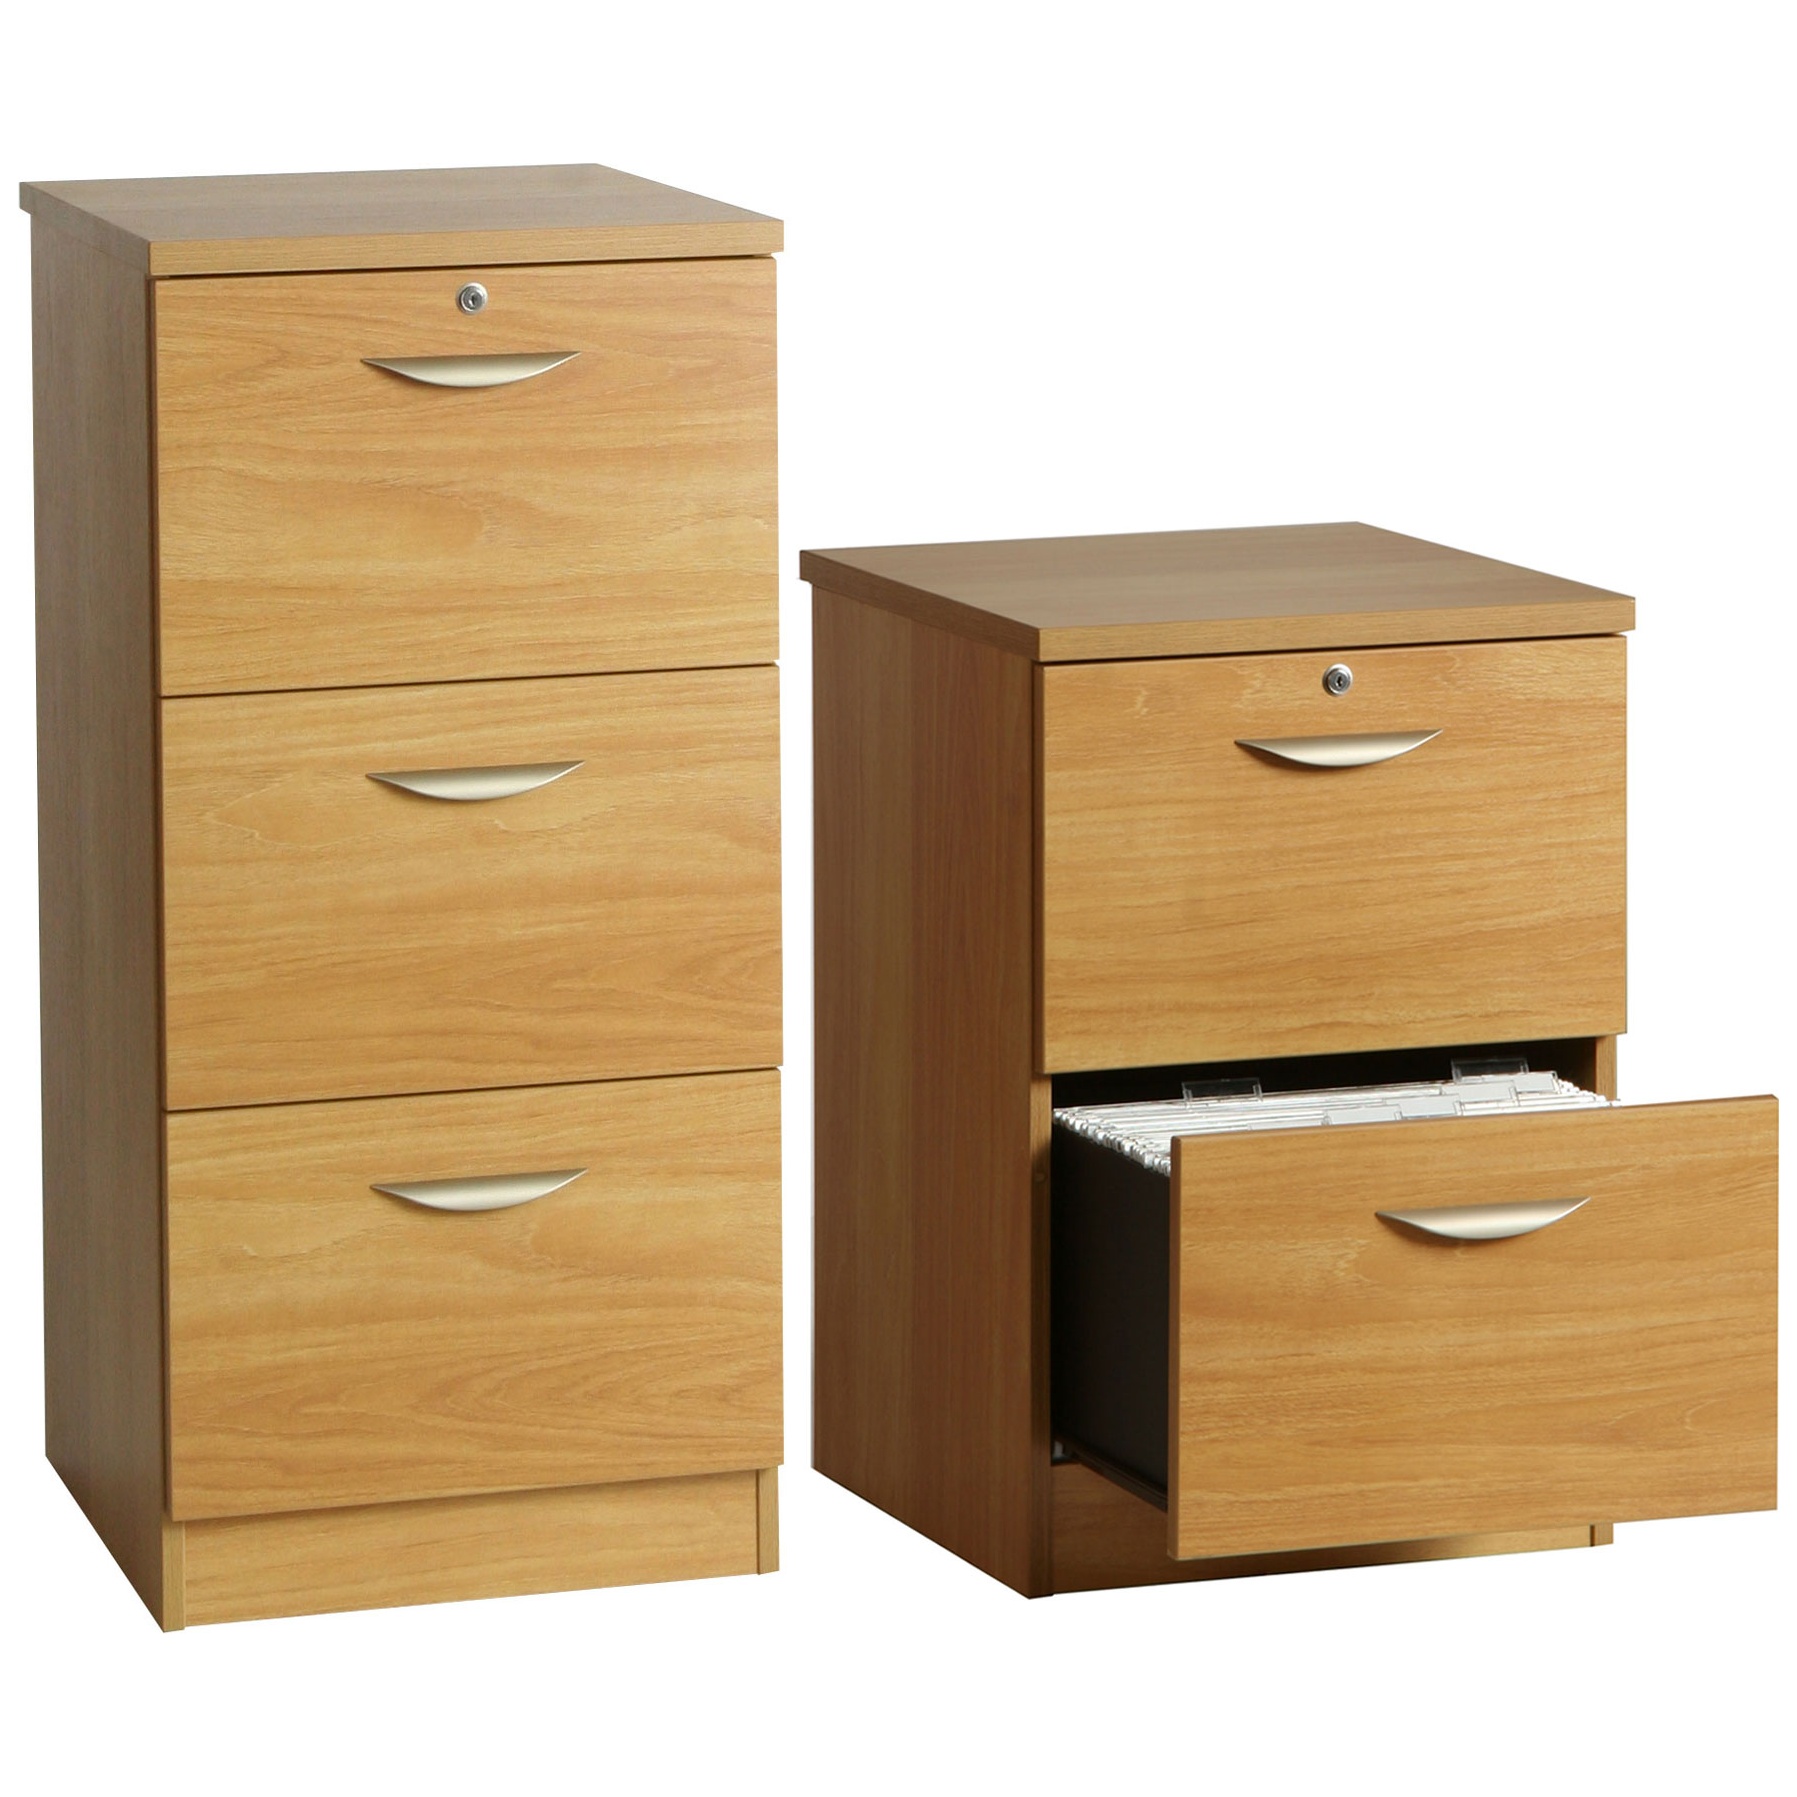 Dorset Filing Cabinets Wooden Filing Cabinets